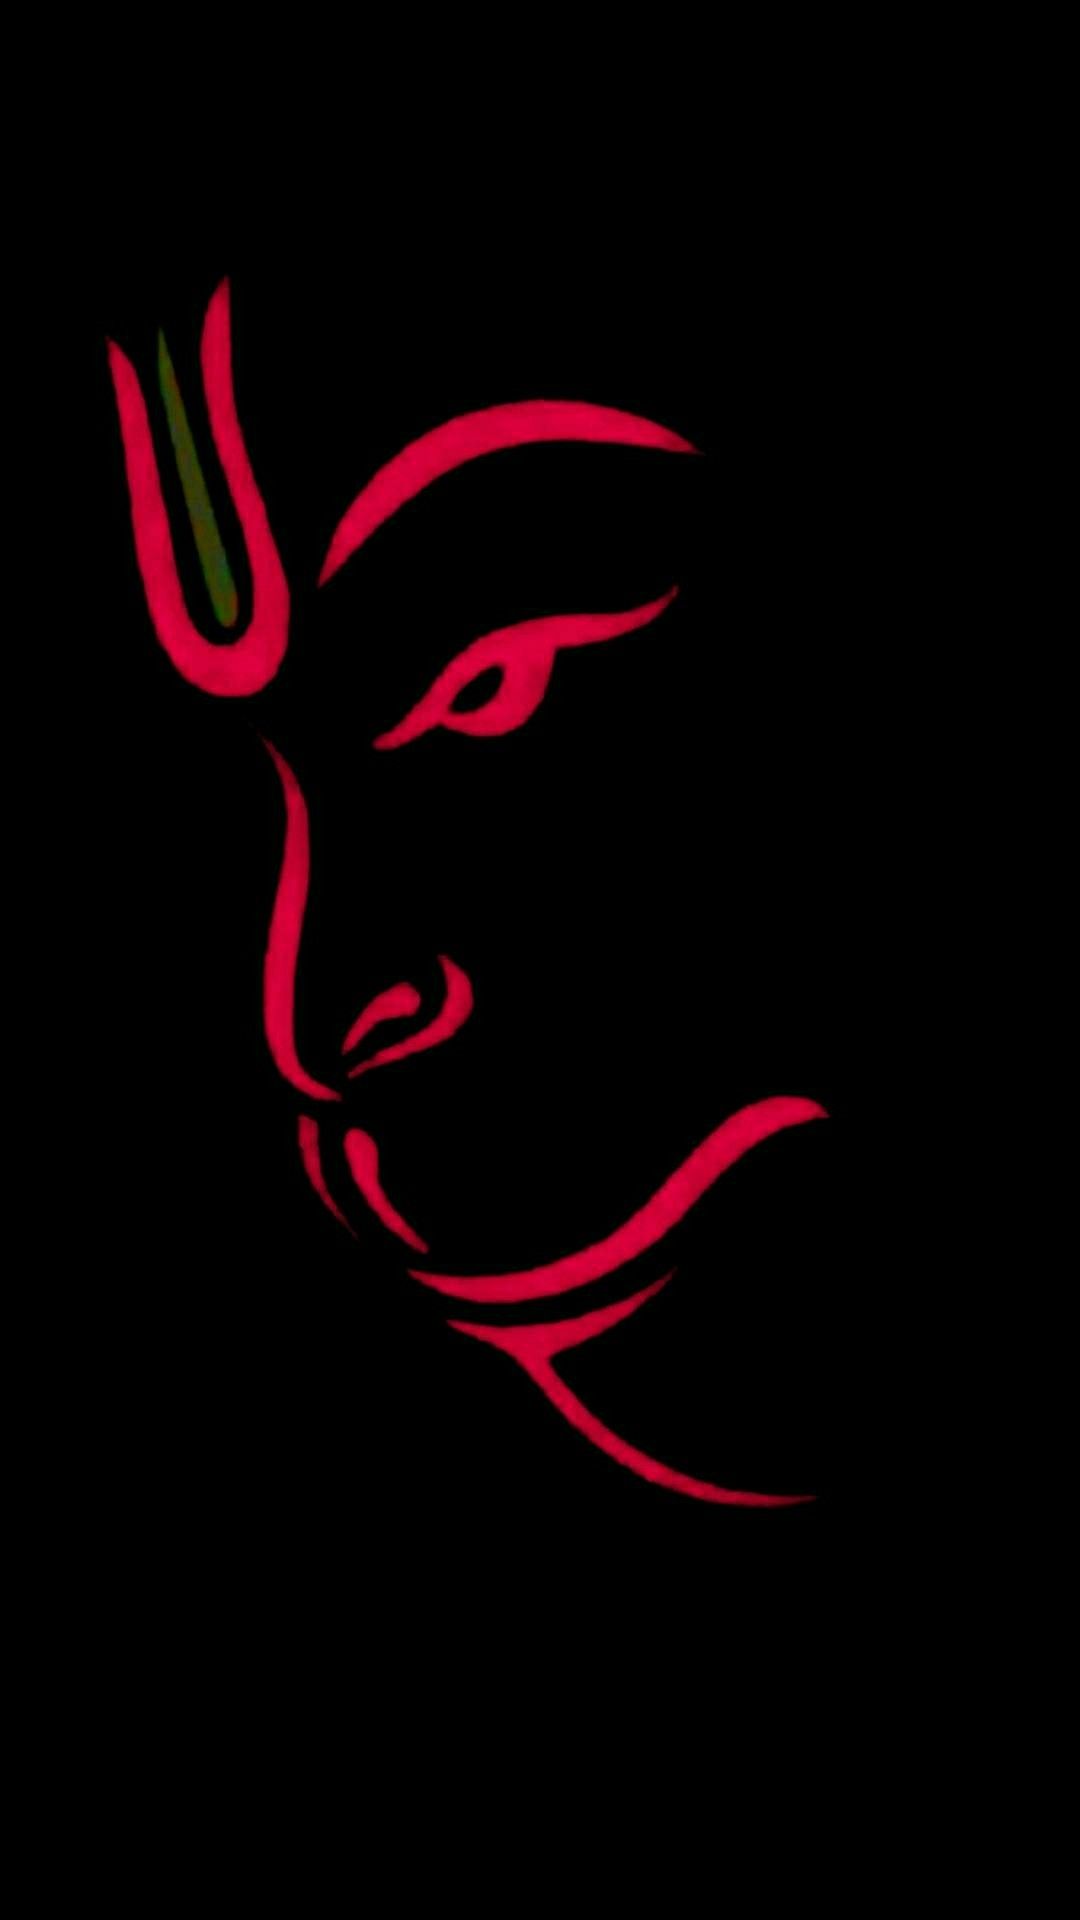 Shivholic. Hanuman wallpaper, Lord